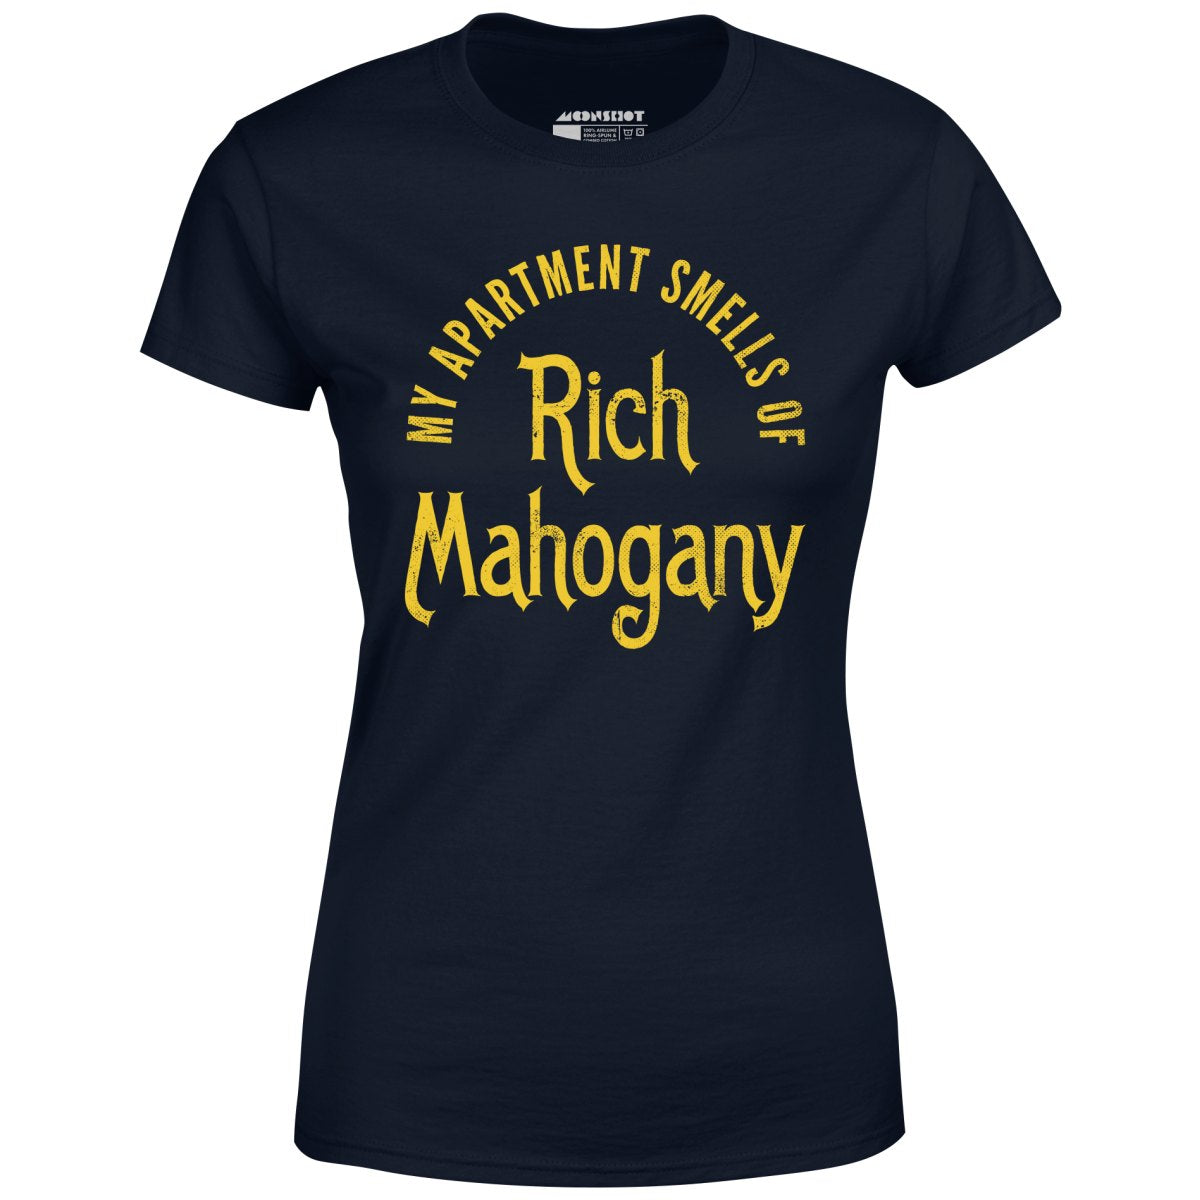 My Apartment Smells of Rich Mahogany - Women's T-Shirt